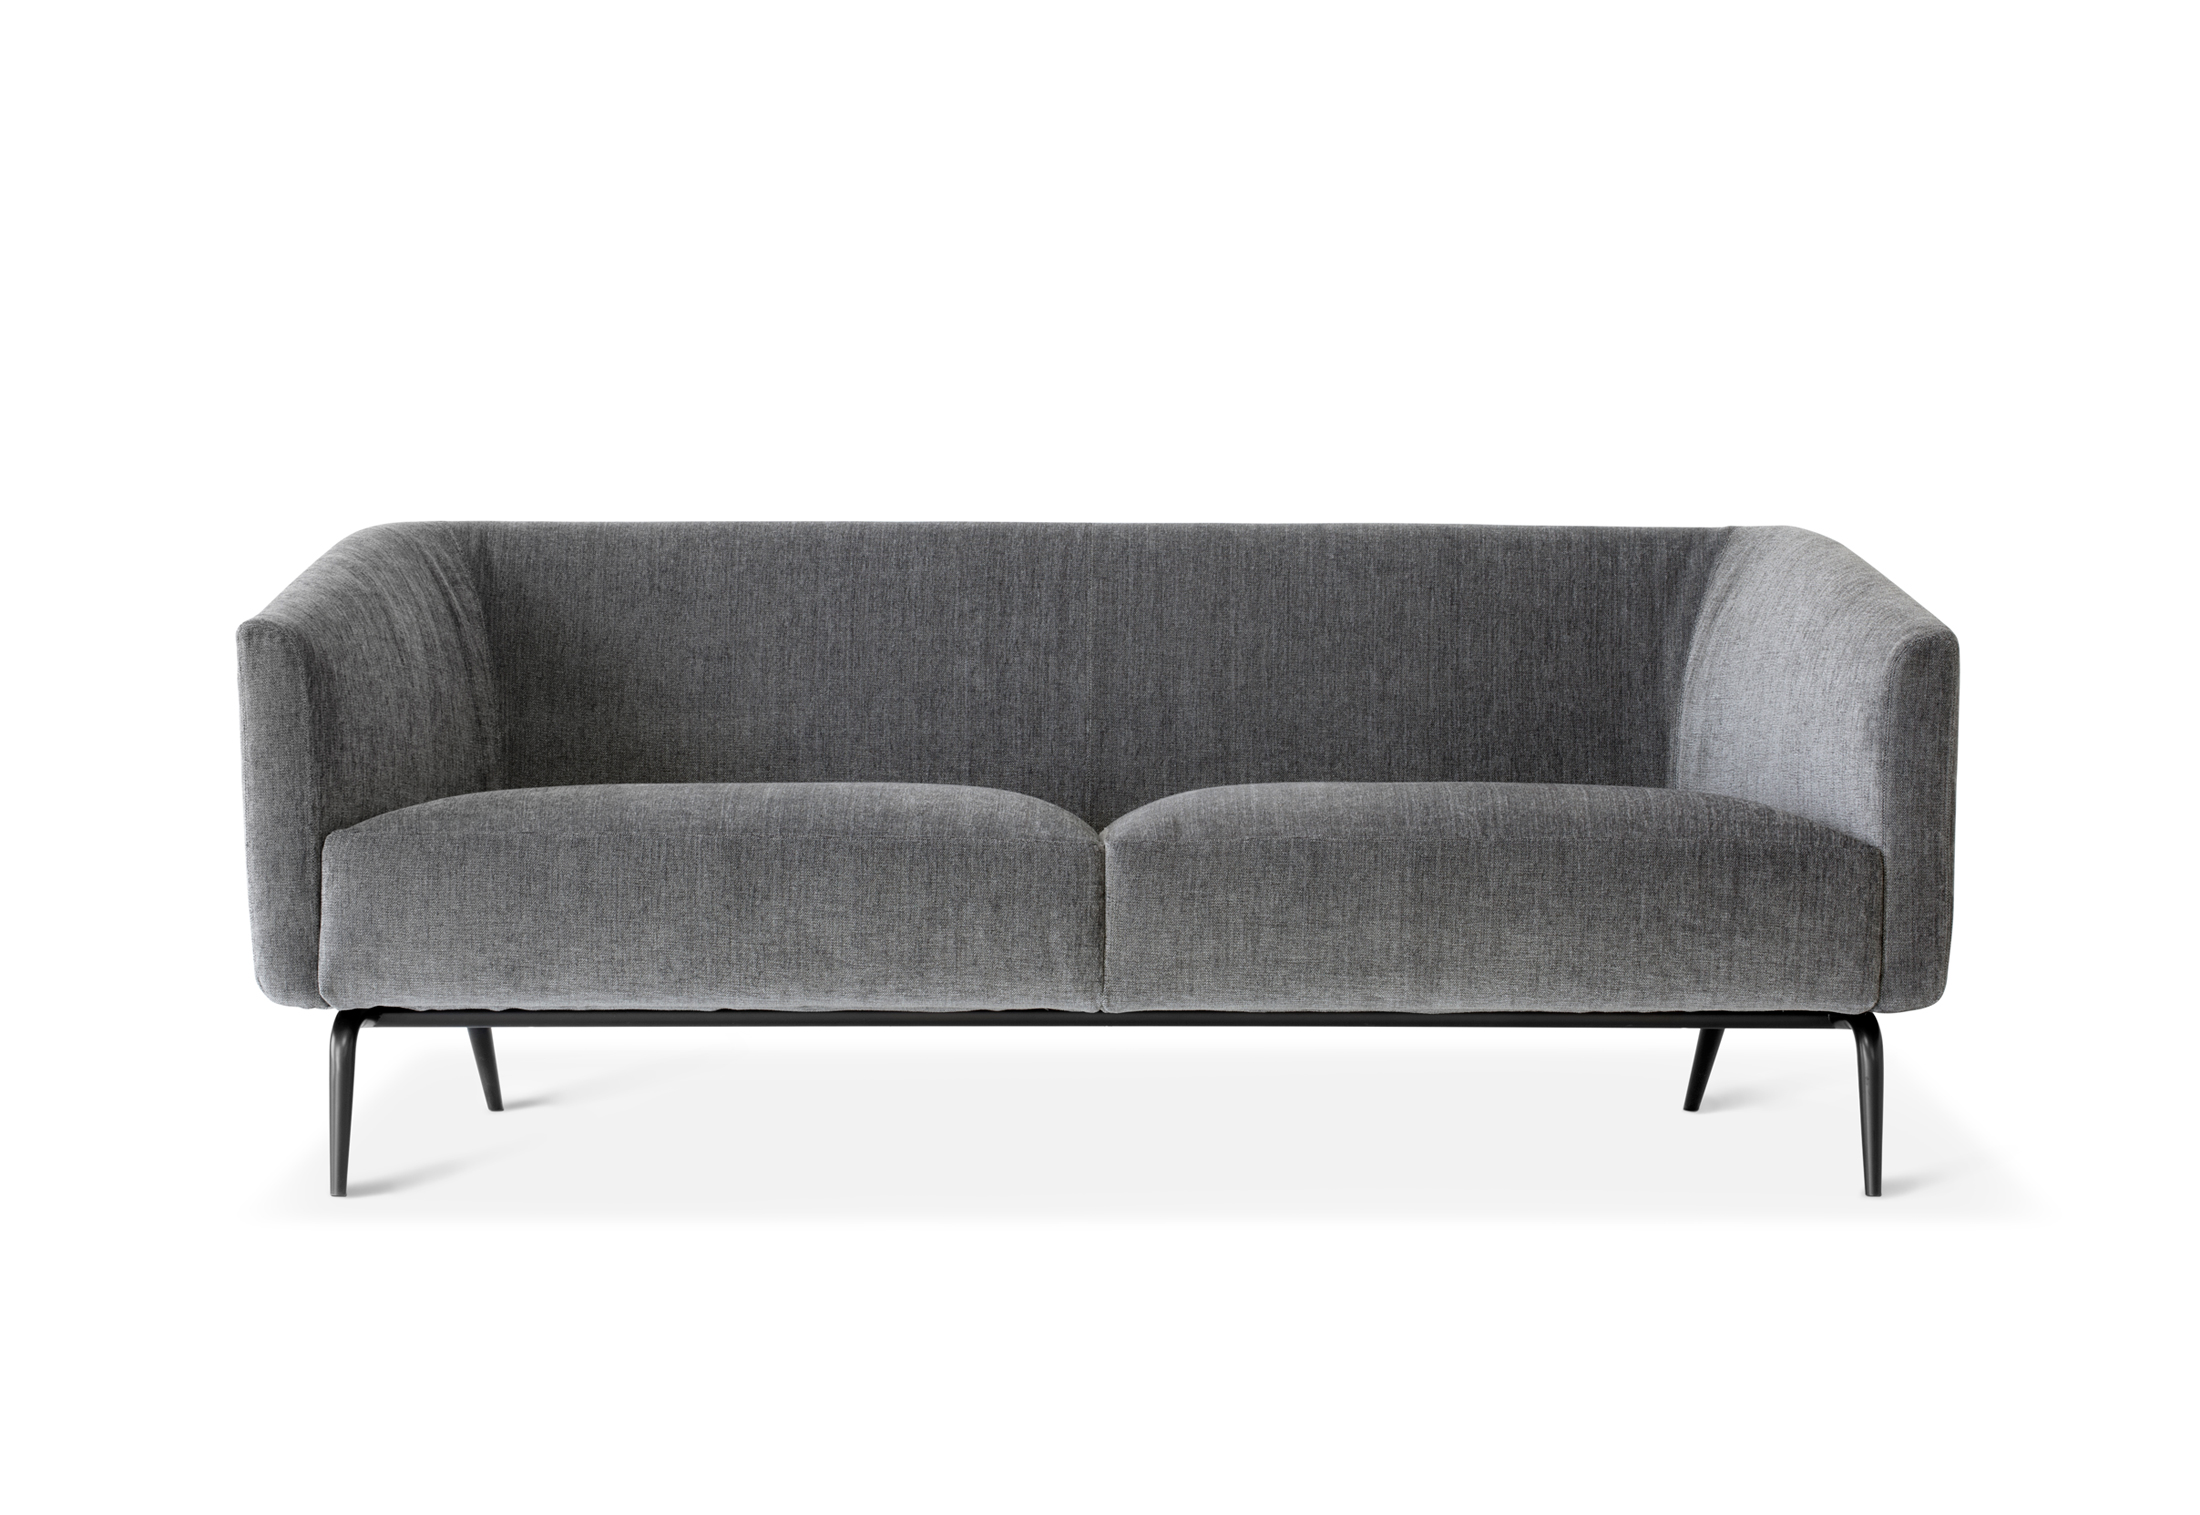 KAIWA Sofa by Matteo Nunziati for Lema